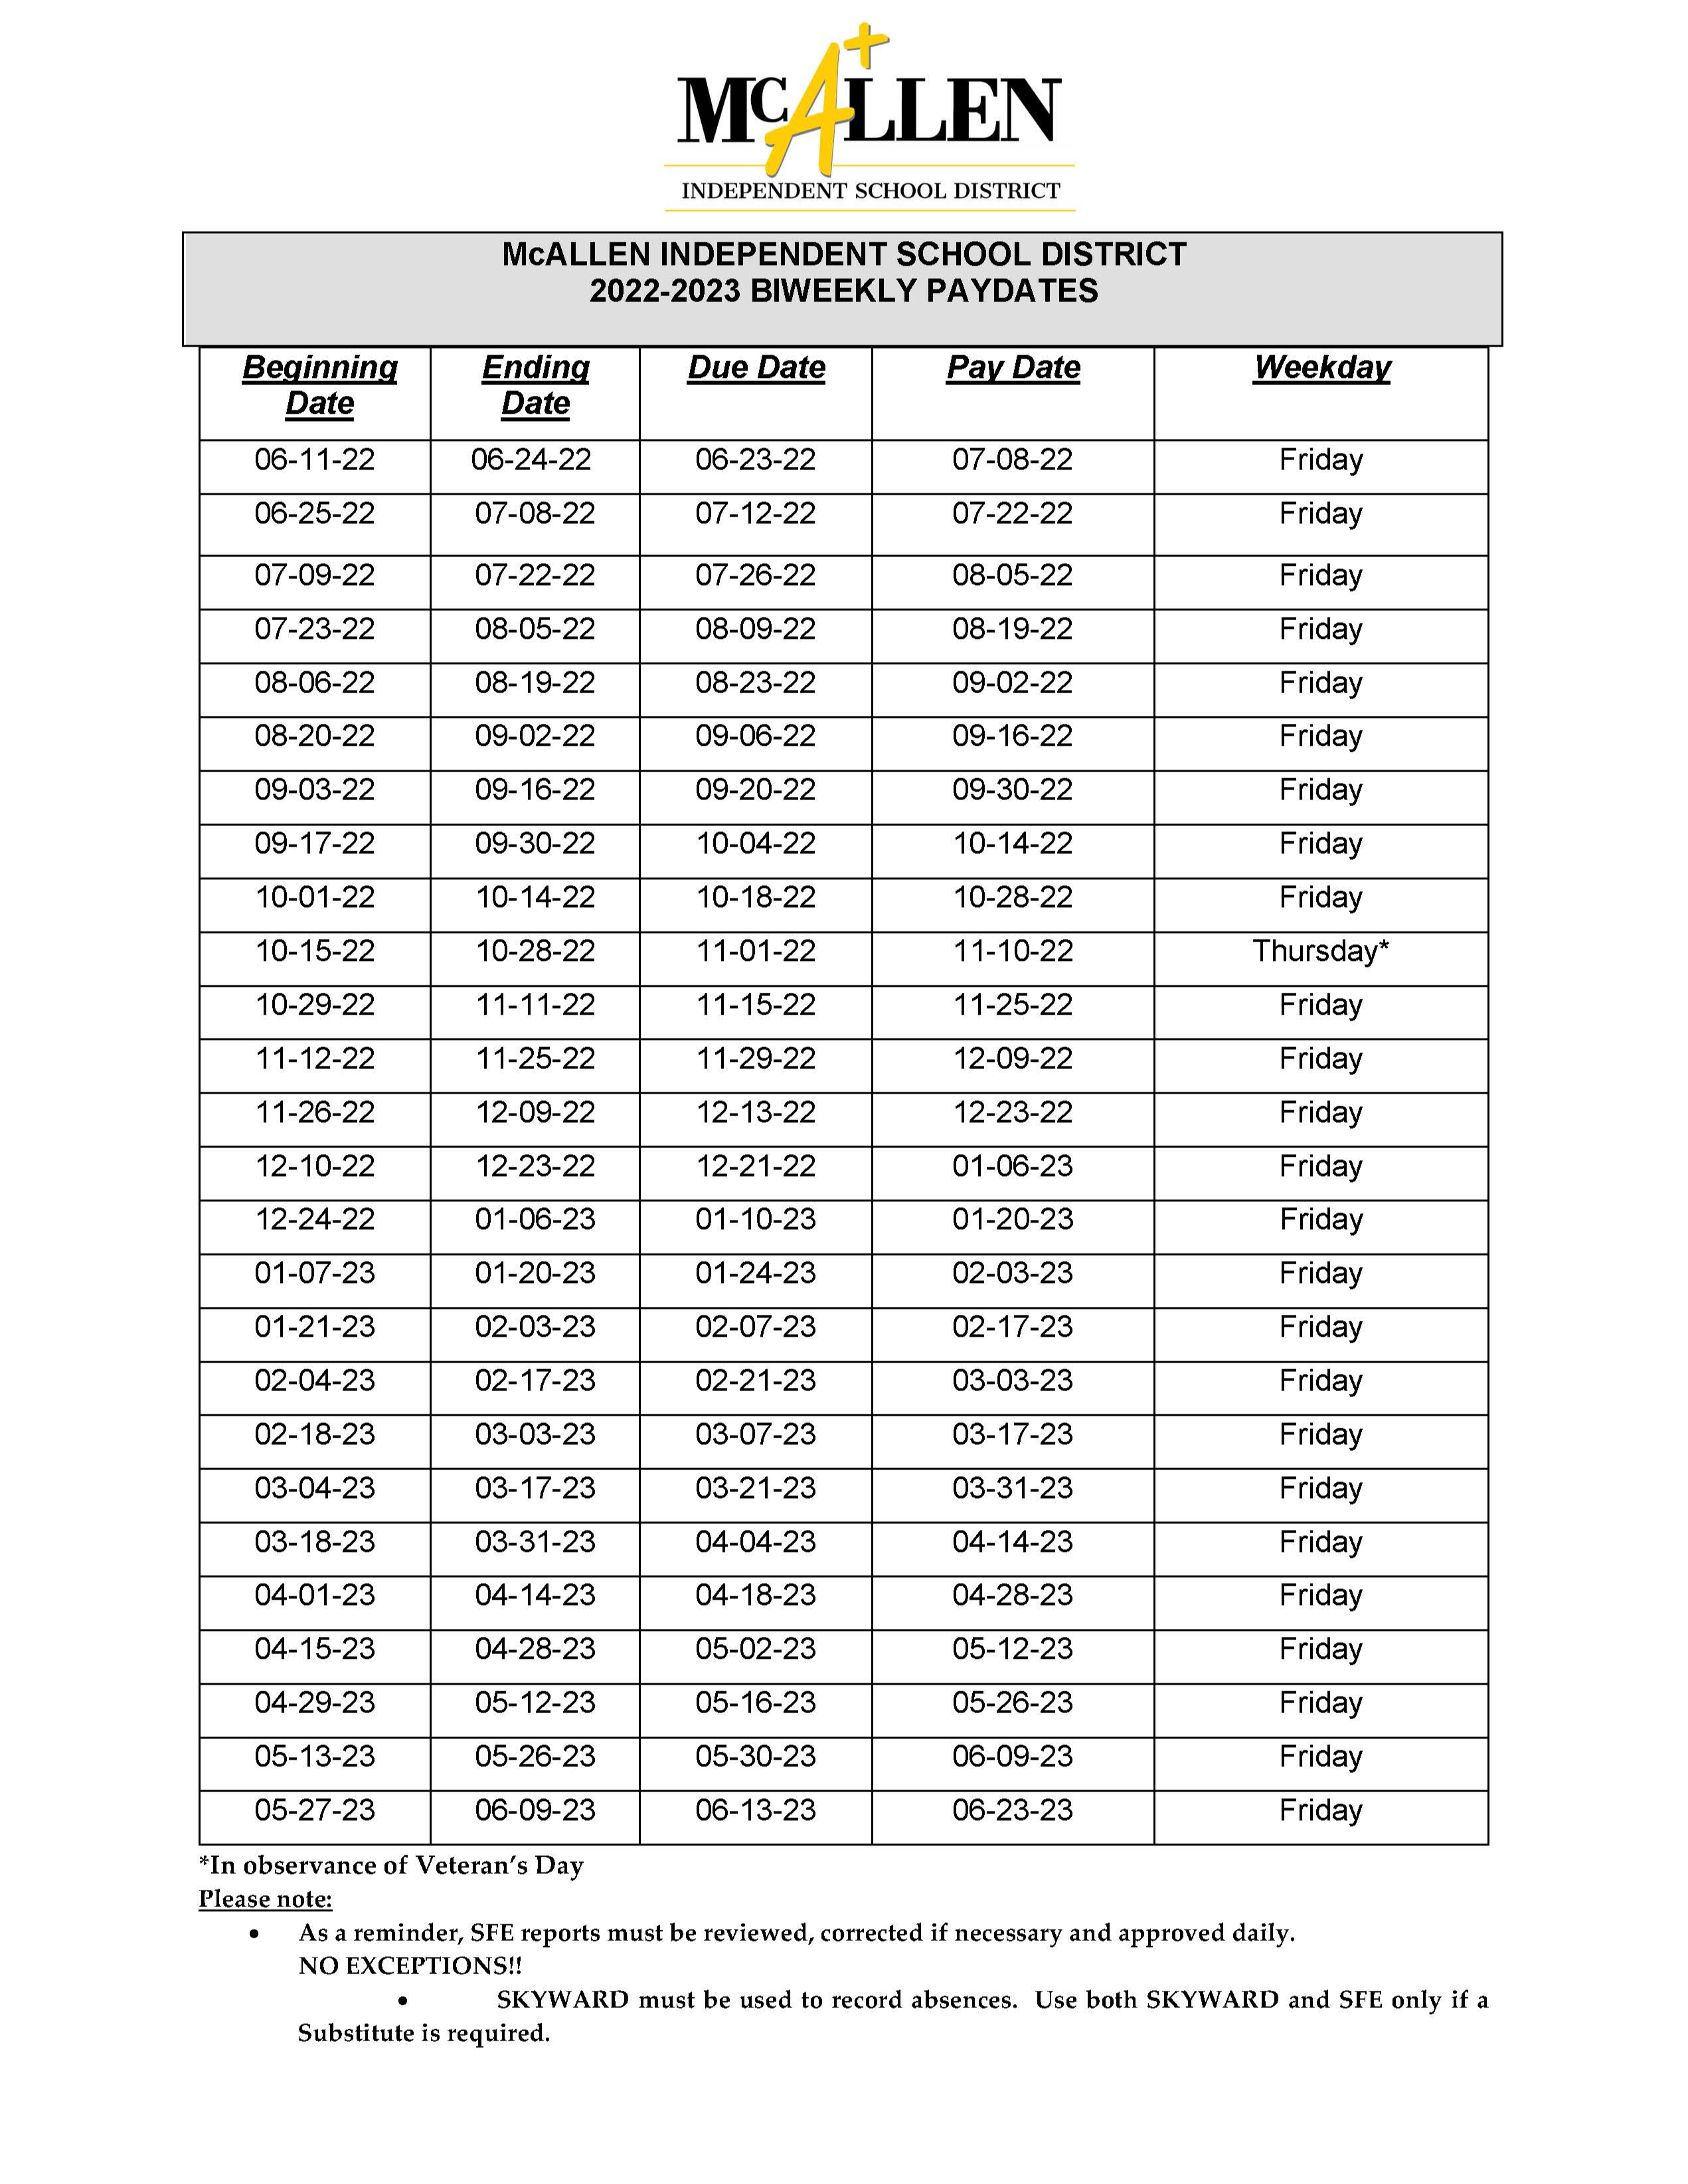 Biweekly Pay Schedule McAllen Independent School District